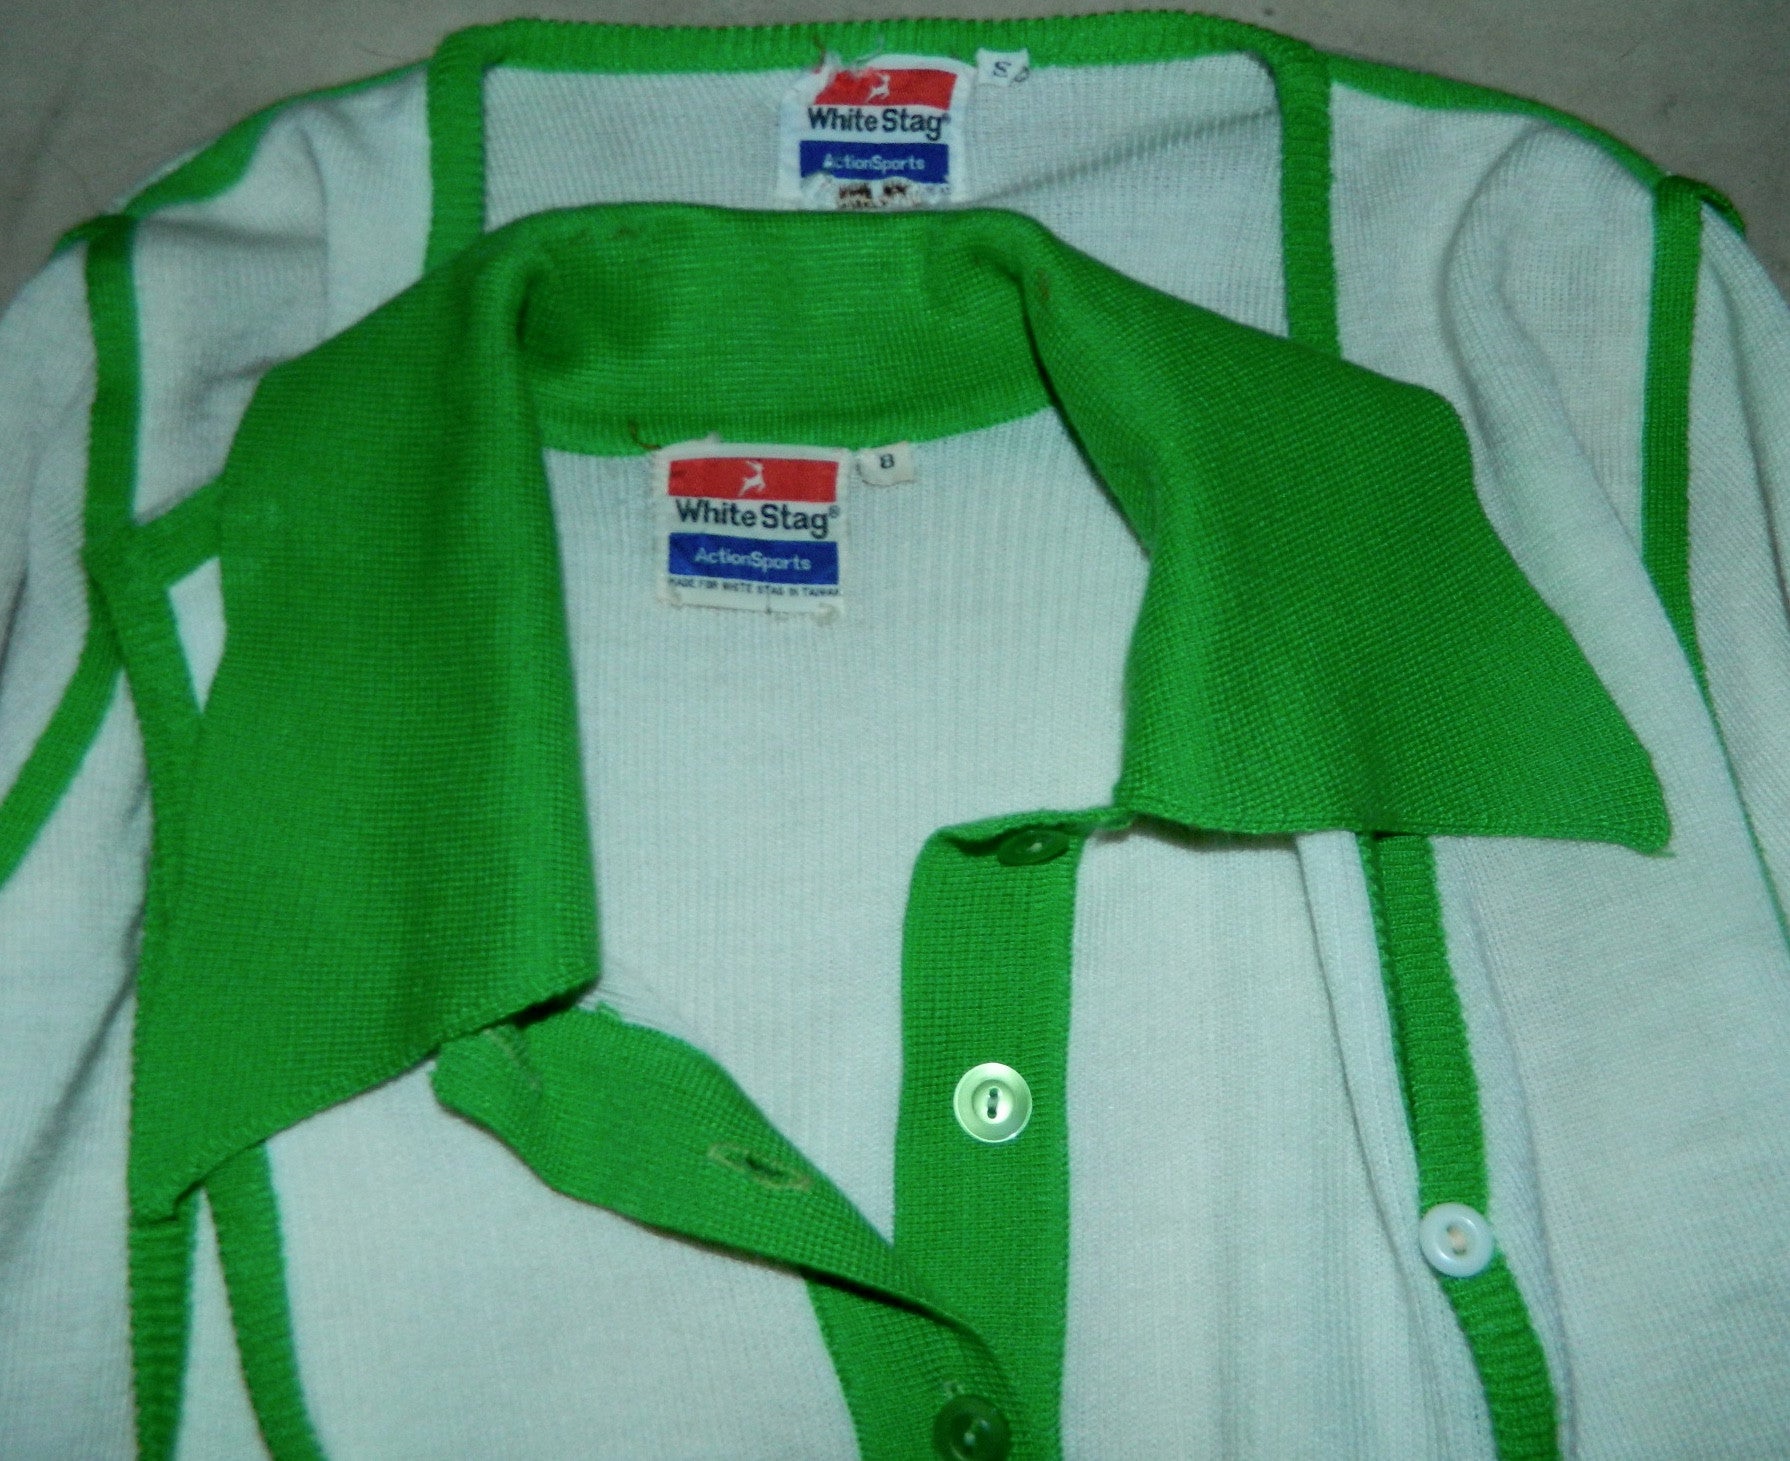 vintage 1970s tennis dress WHITE STAG knit mini dress cardigan sweater white kelly green XS